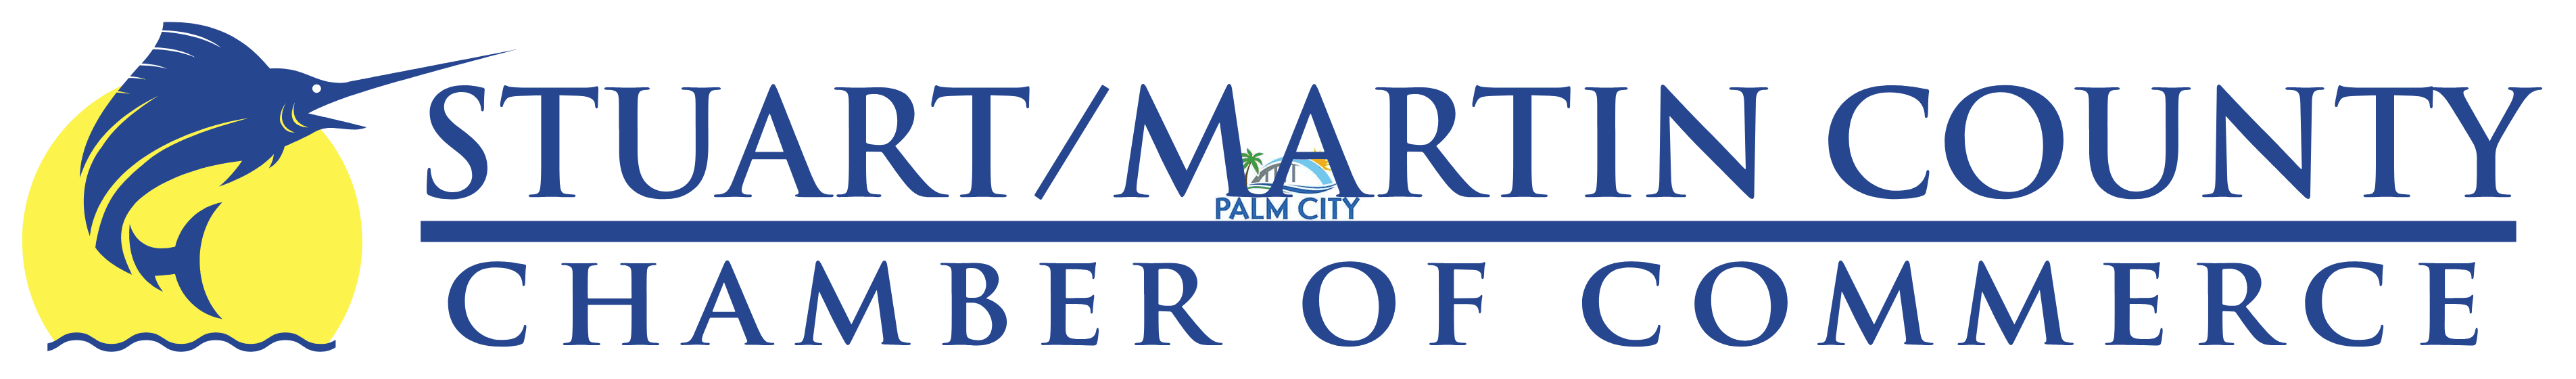 Stuart/Martin County Chamber of Commerce